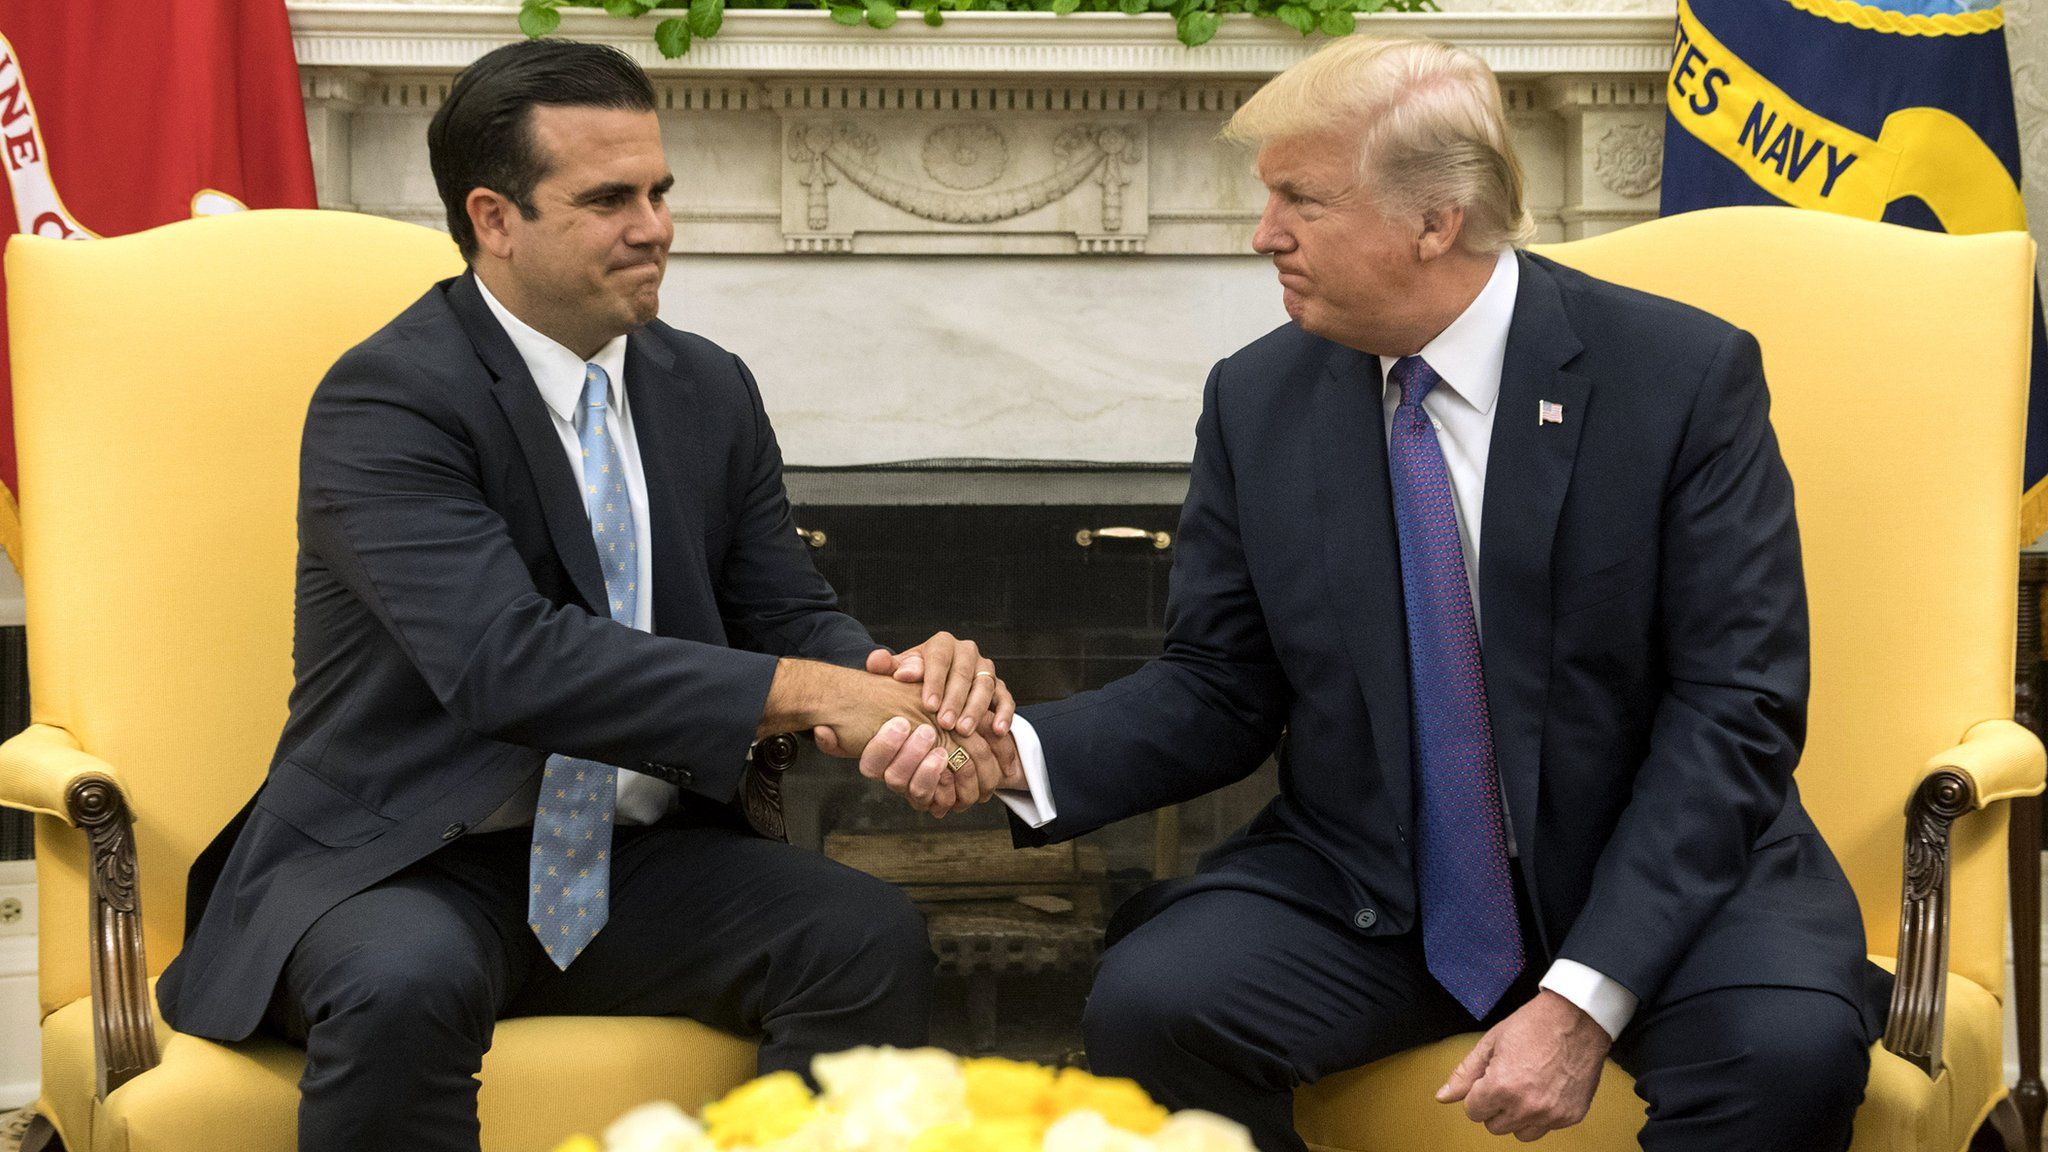 President Trump and Puerto Rico governor Ricardo Rossello,